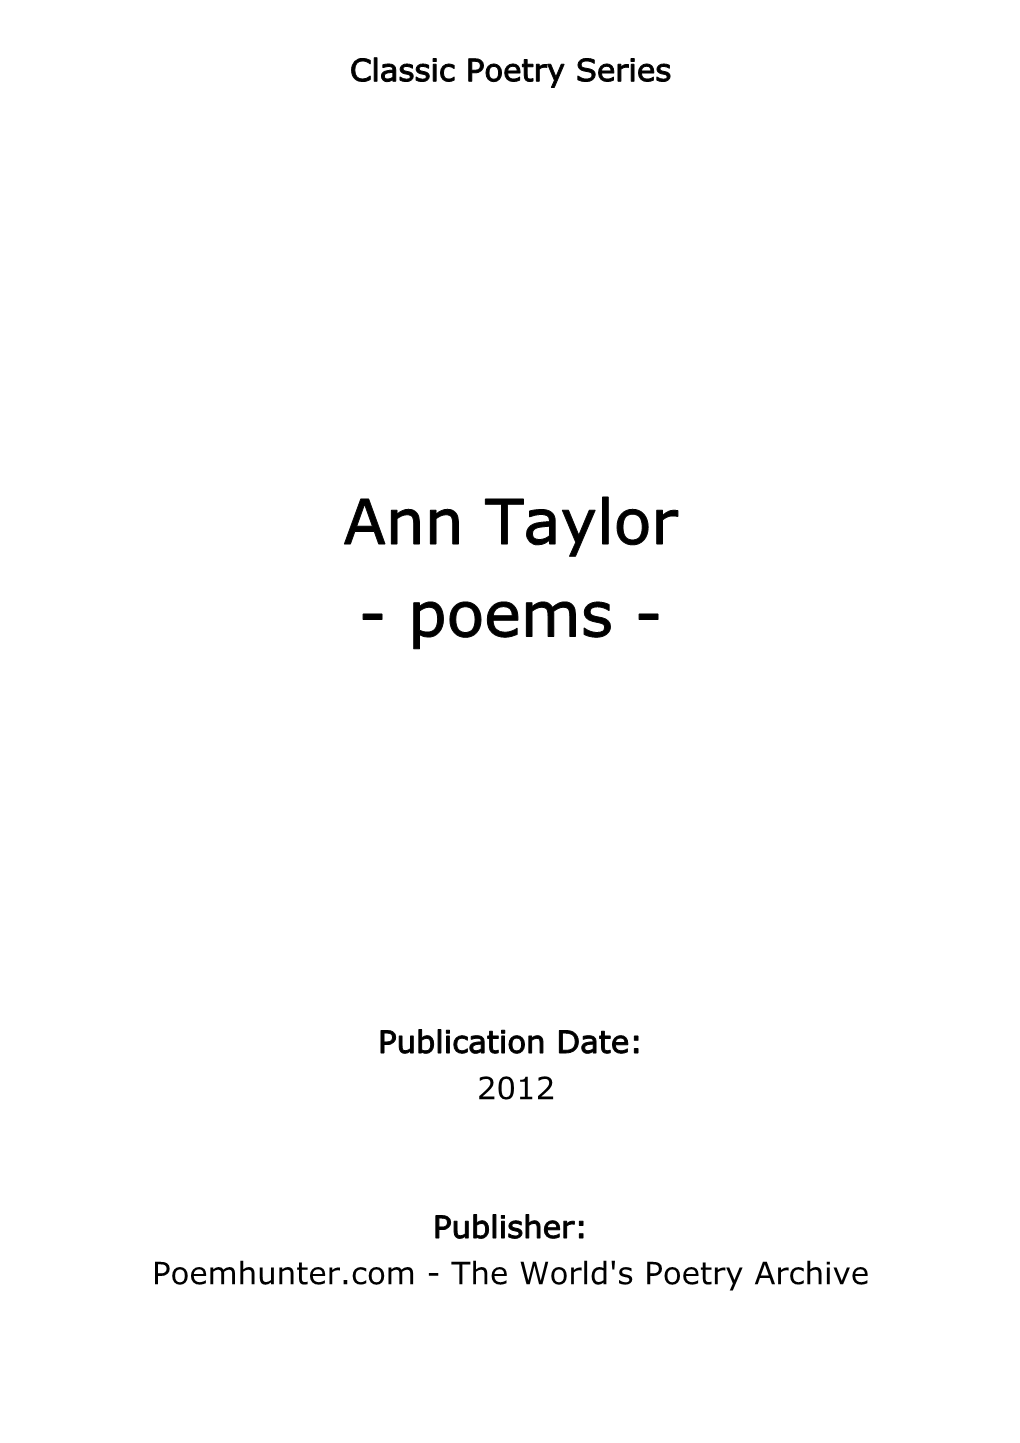 Ann Taylor - Poems